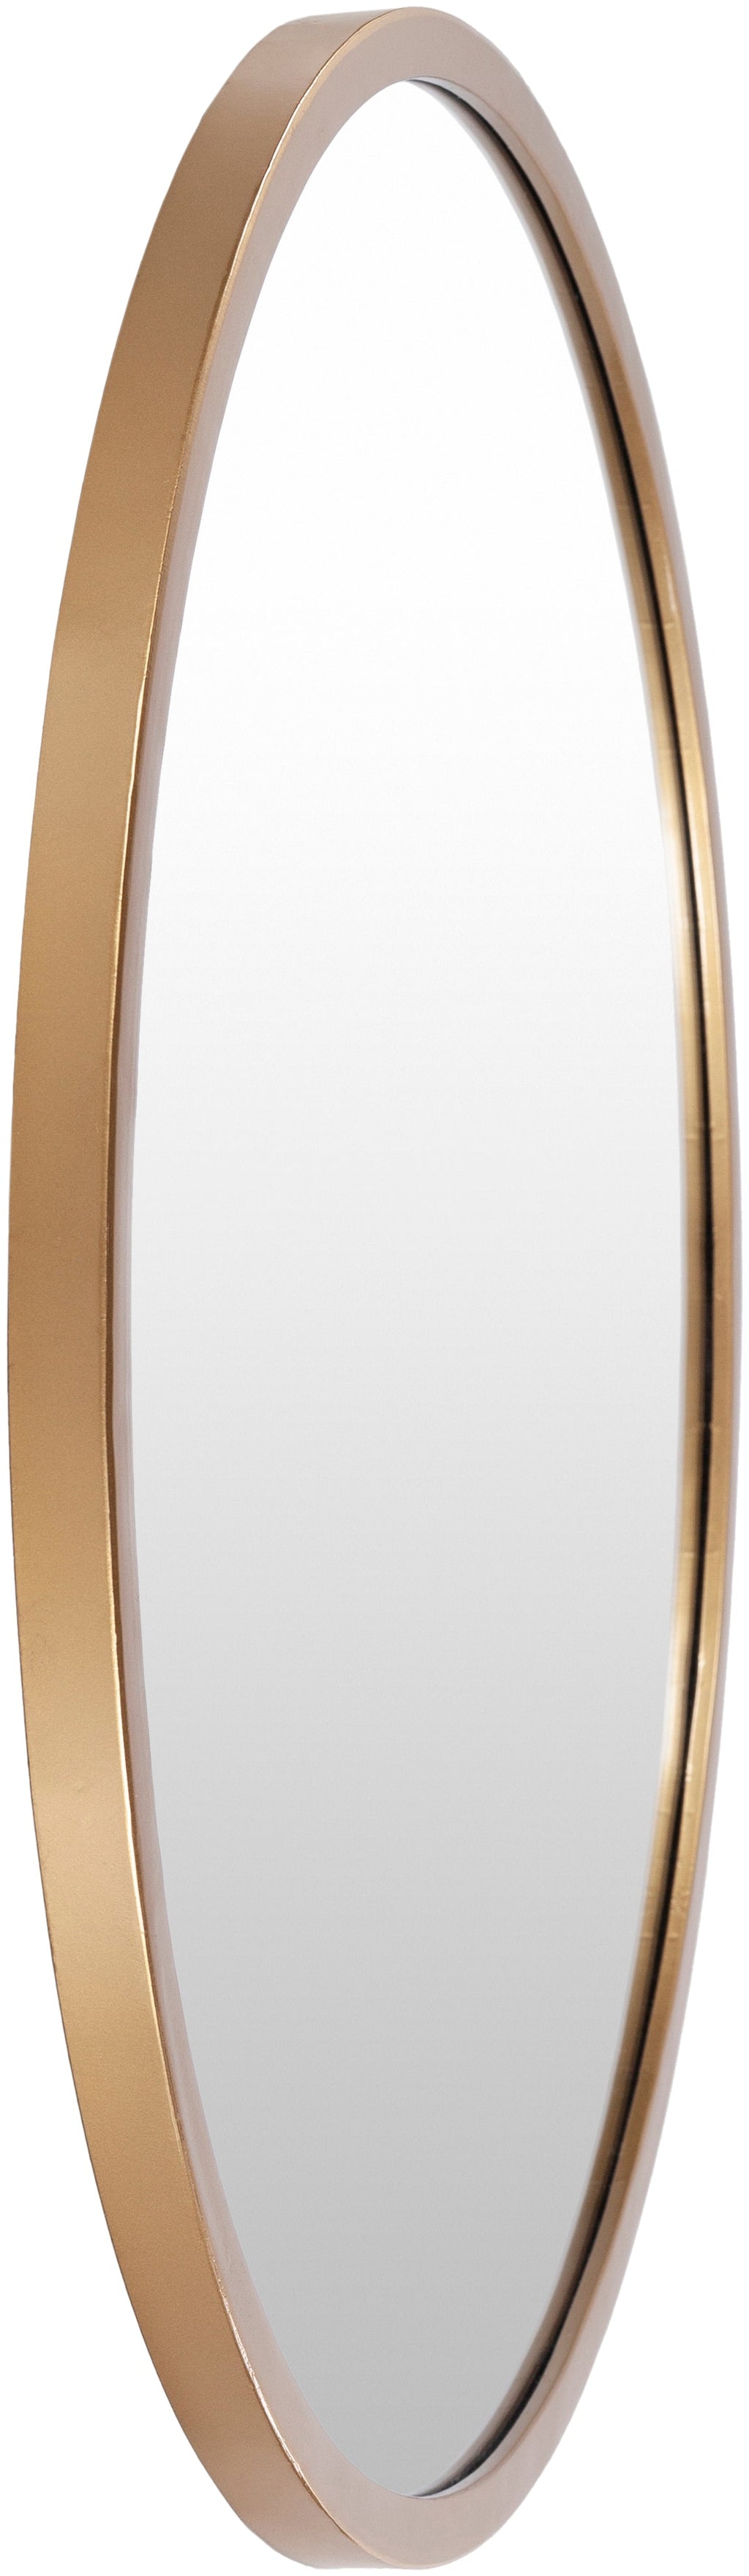 Carmen RME-001 Round Mirror in Gold by Surya